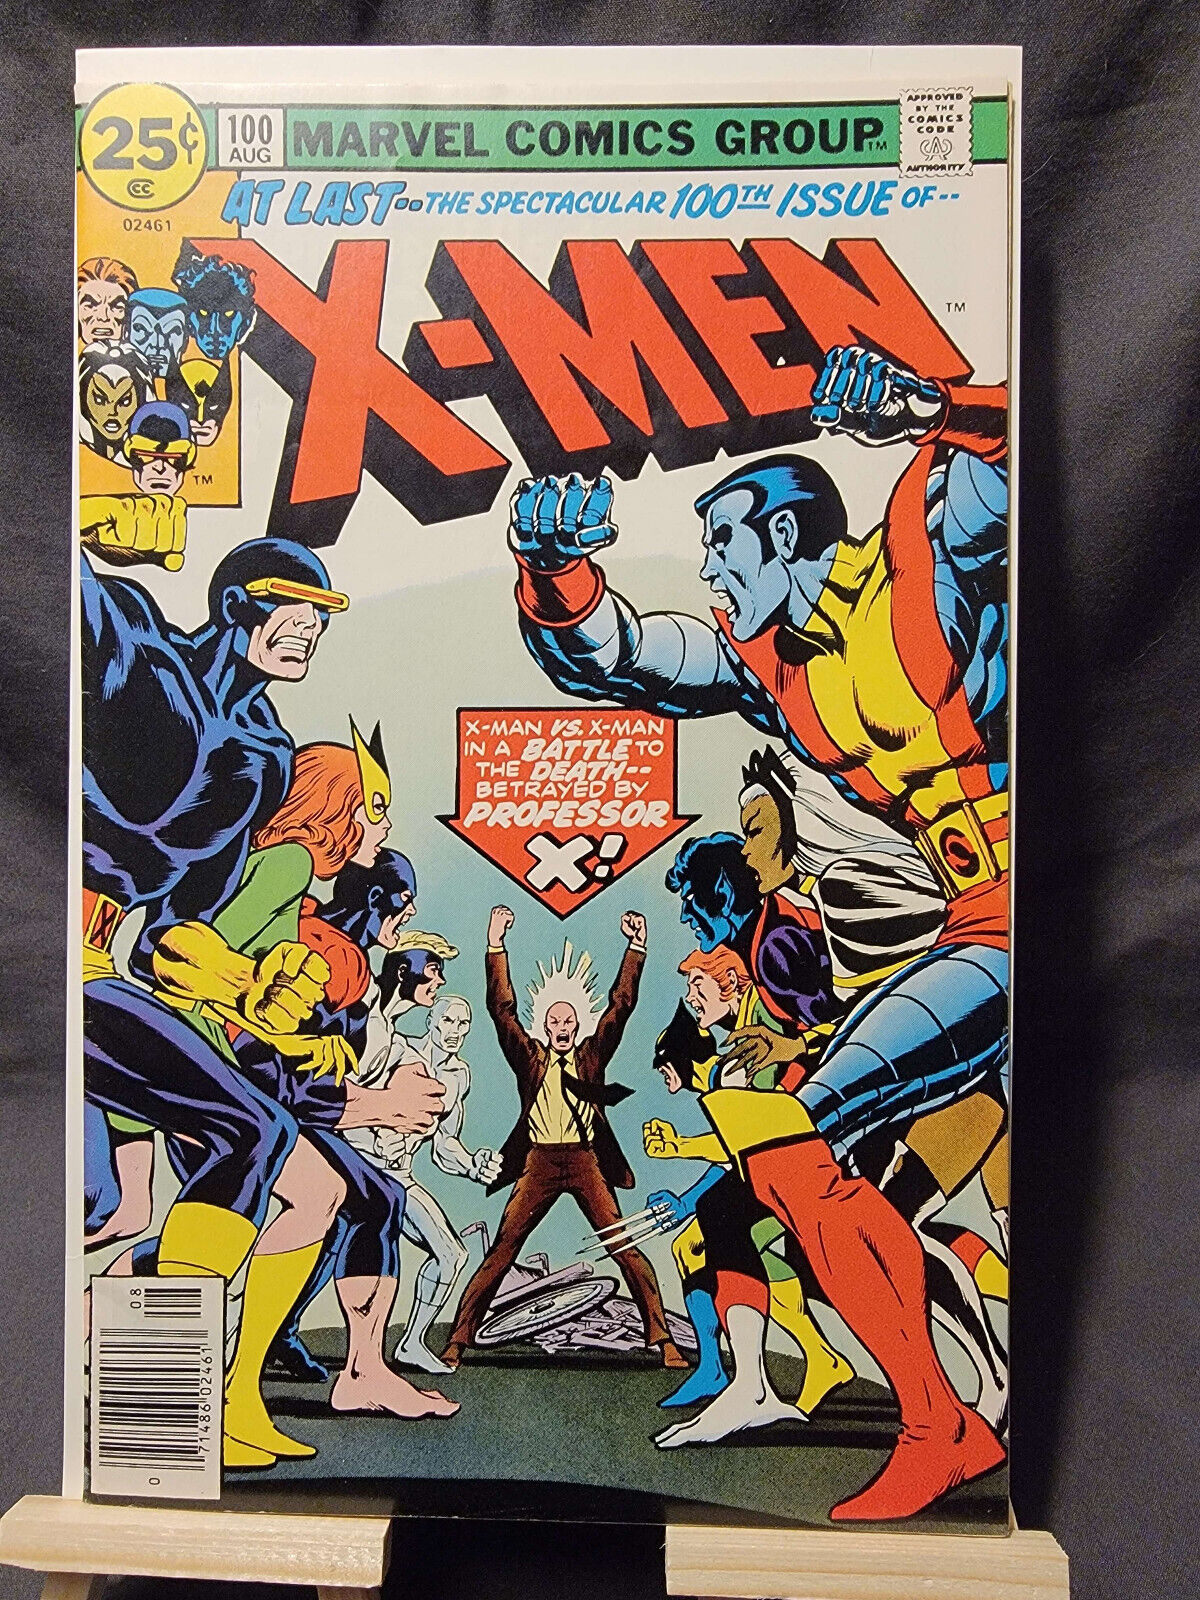 X-MEN #100, Aug 1976. Claremont, Cockrum. Old vs New X-Men. Very good condition